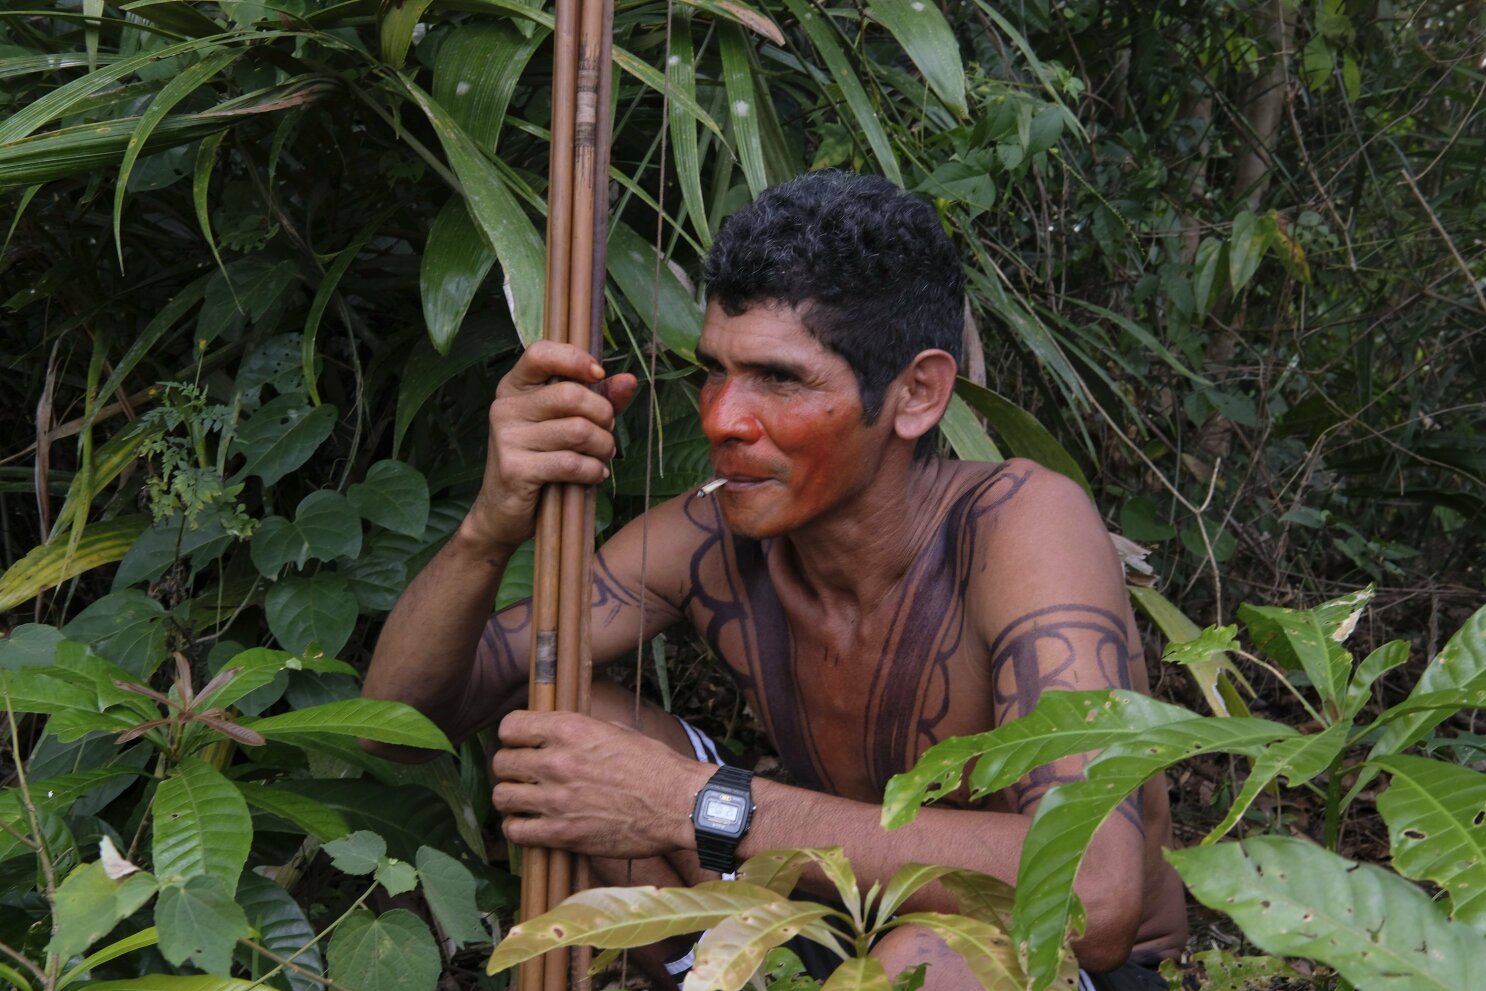 amazon rainforest people